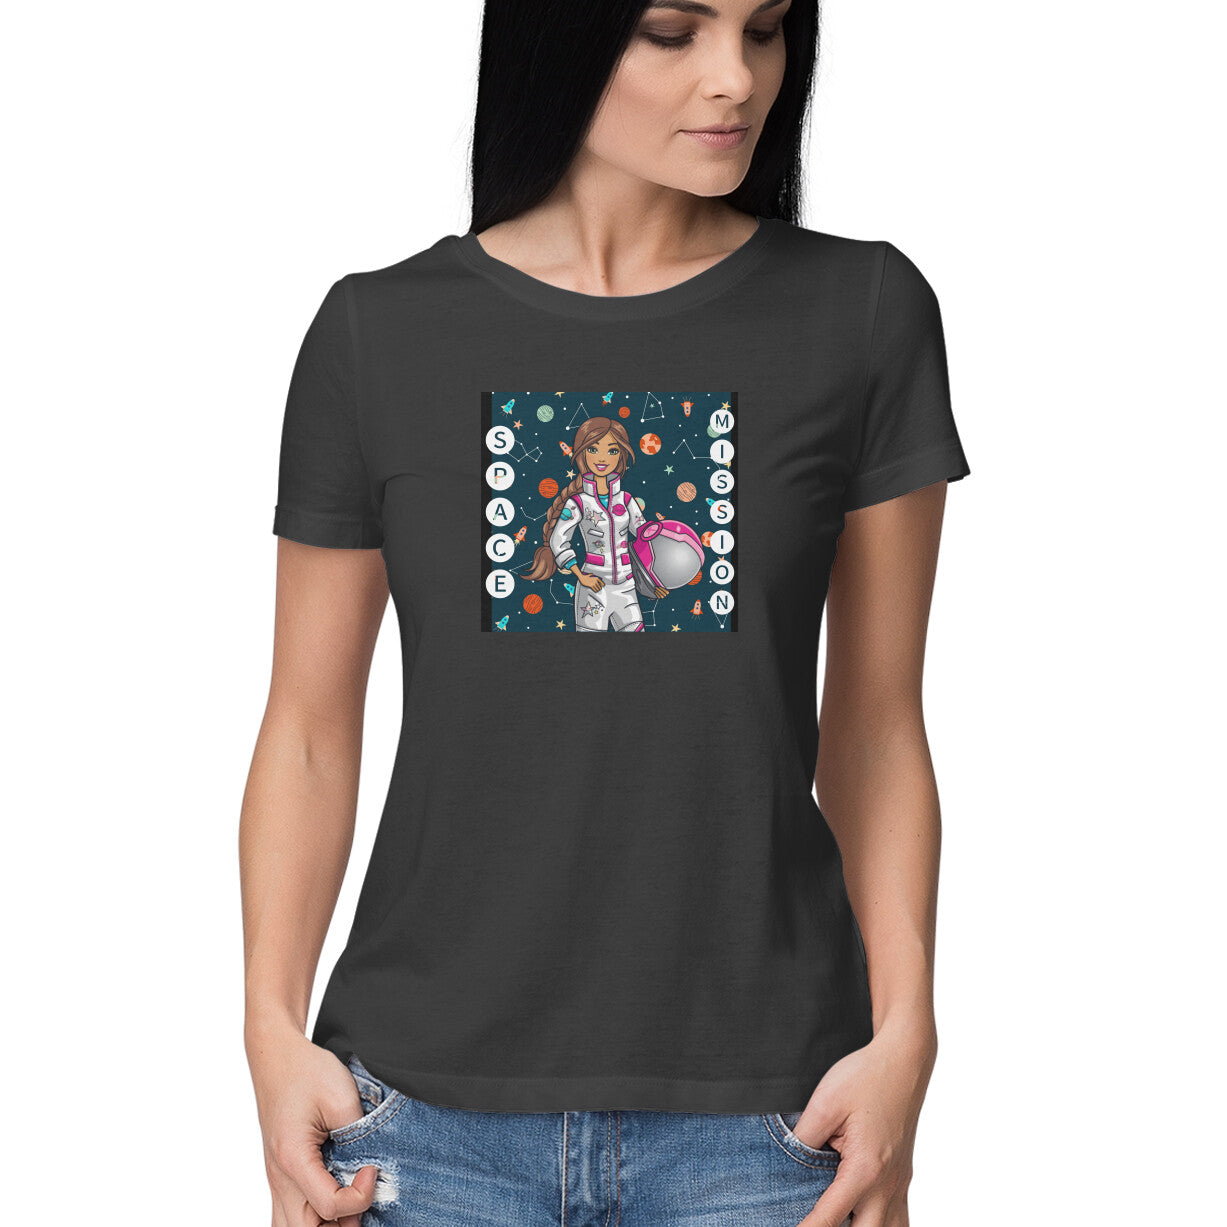 Astronaut Space Black T-shirt for Women 